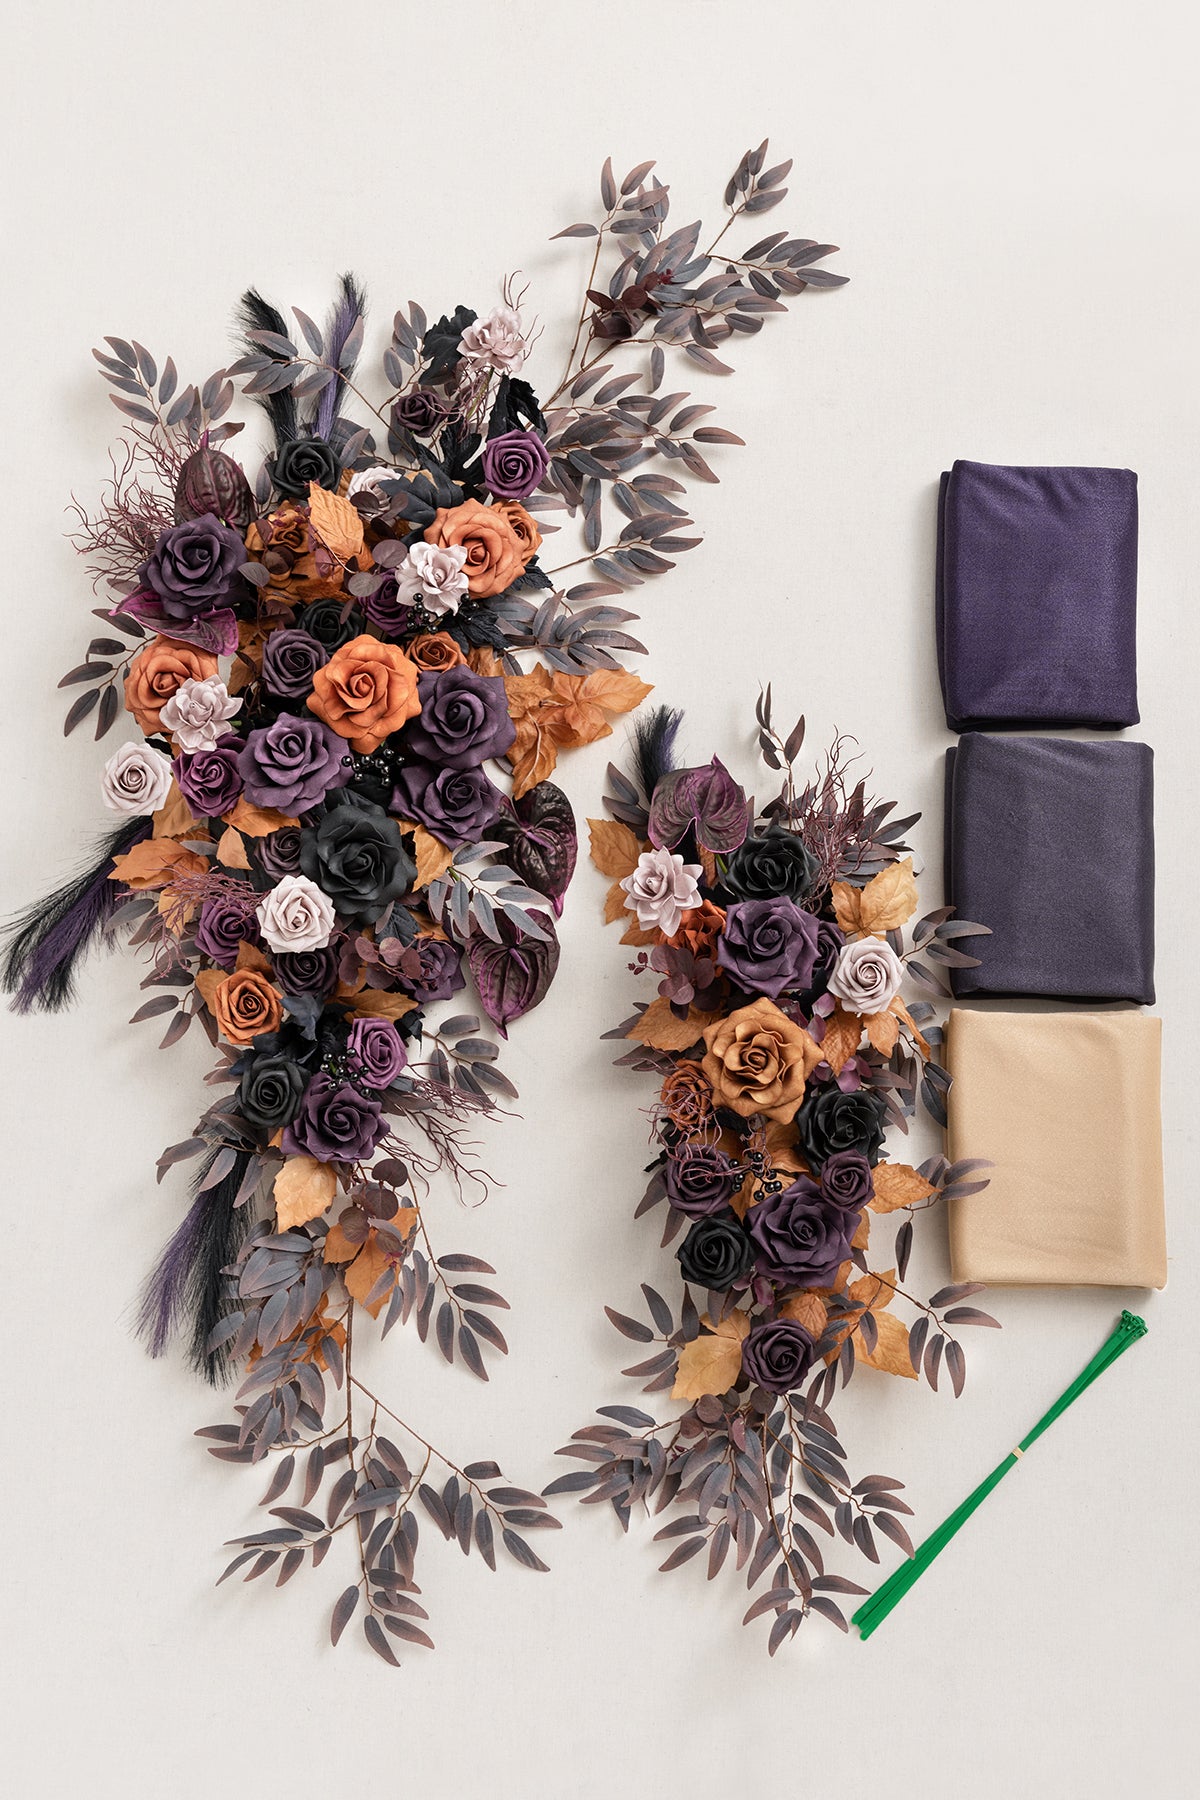 Flower Arch Decor with Drapes in Twilight Purple & Harvest Orange